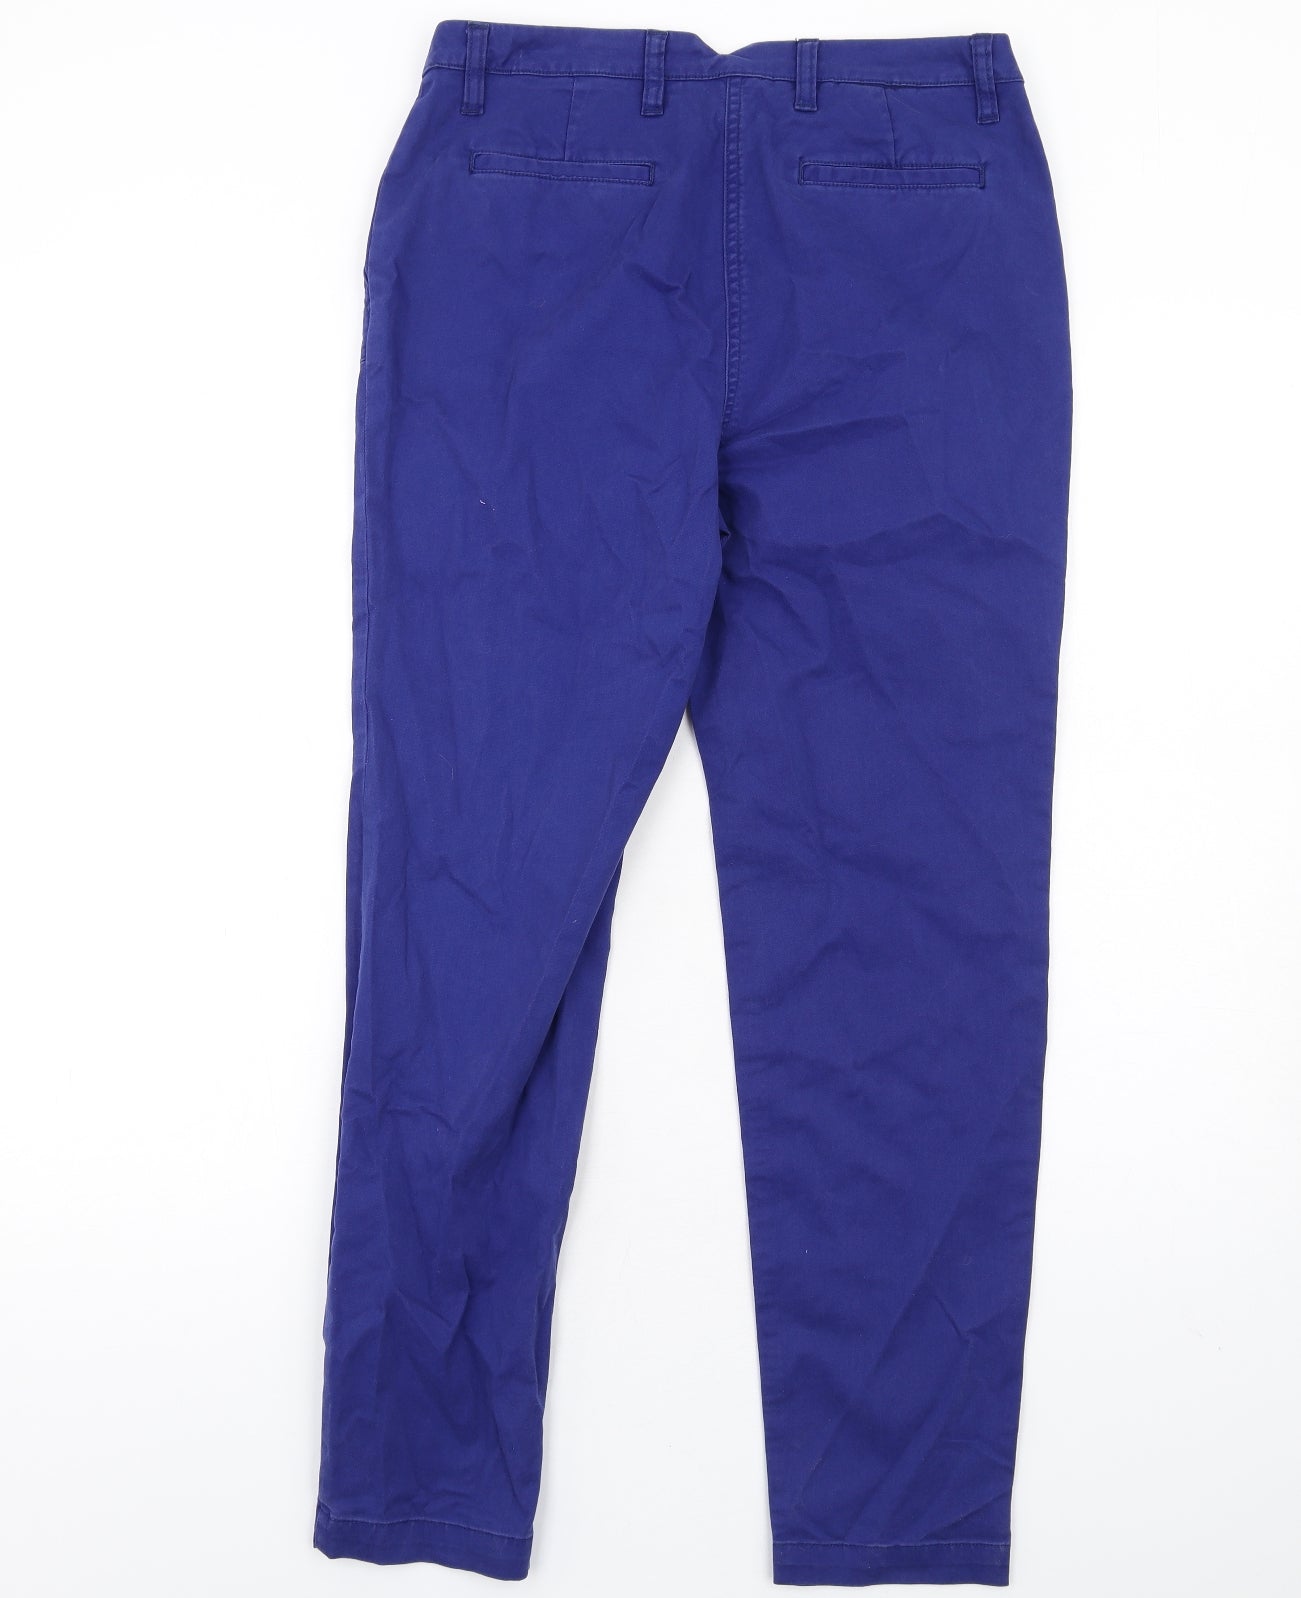 Boden Womens Blue Cotton Carrot Trousers Size 10 L29 in Regular Zip